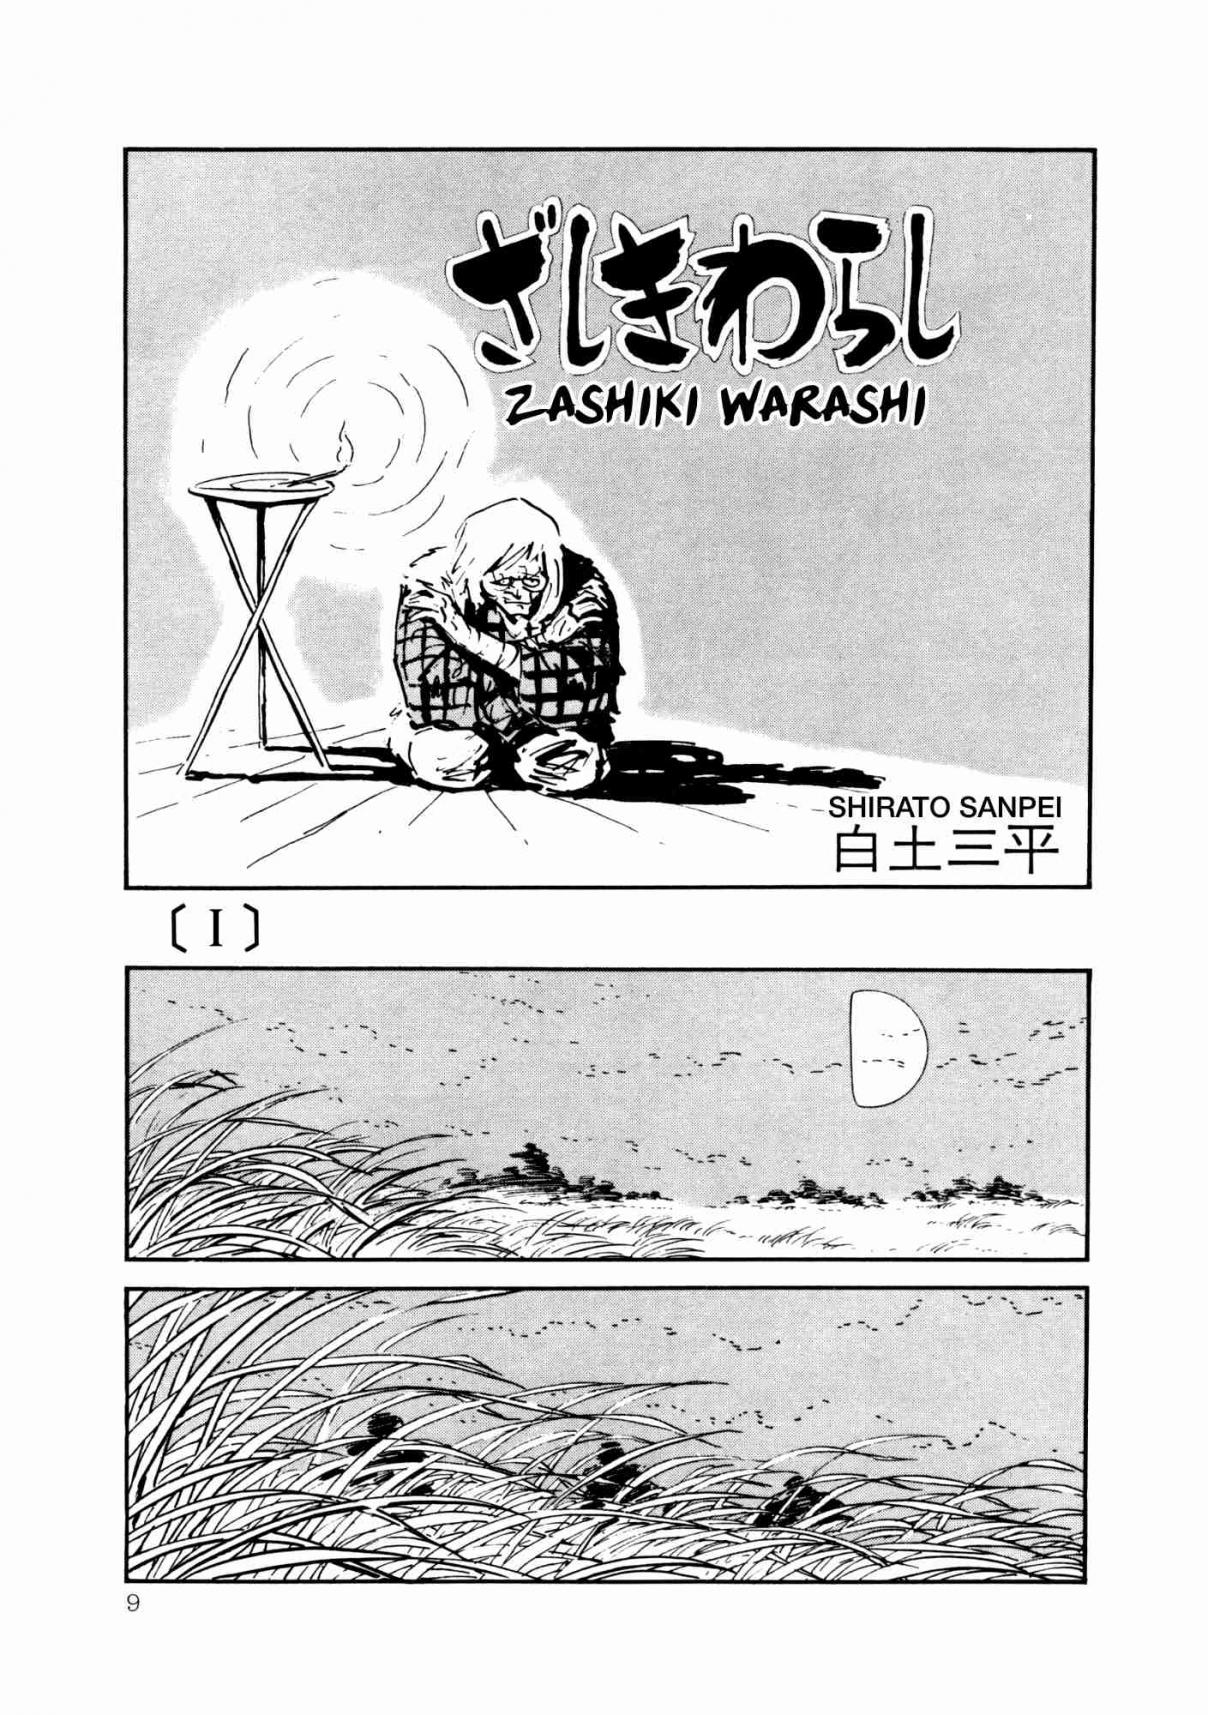 The Wooden Mortared Kingdom Garo 20th Anniversary Memorial Issue Vol. 1 Ch. 1 Zashiki Warashi [Shirato Sanpei]